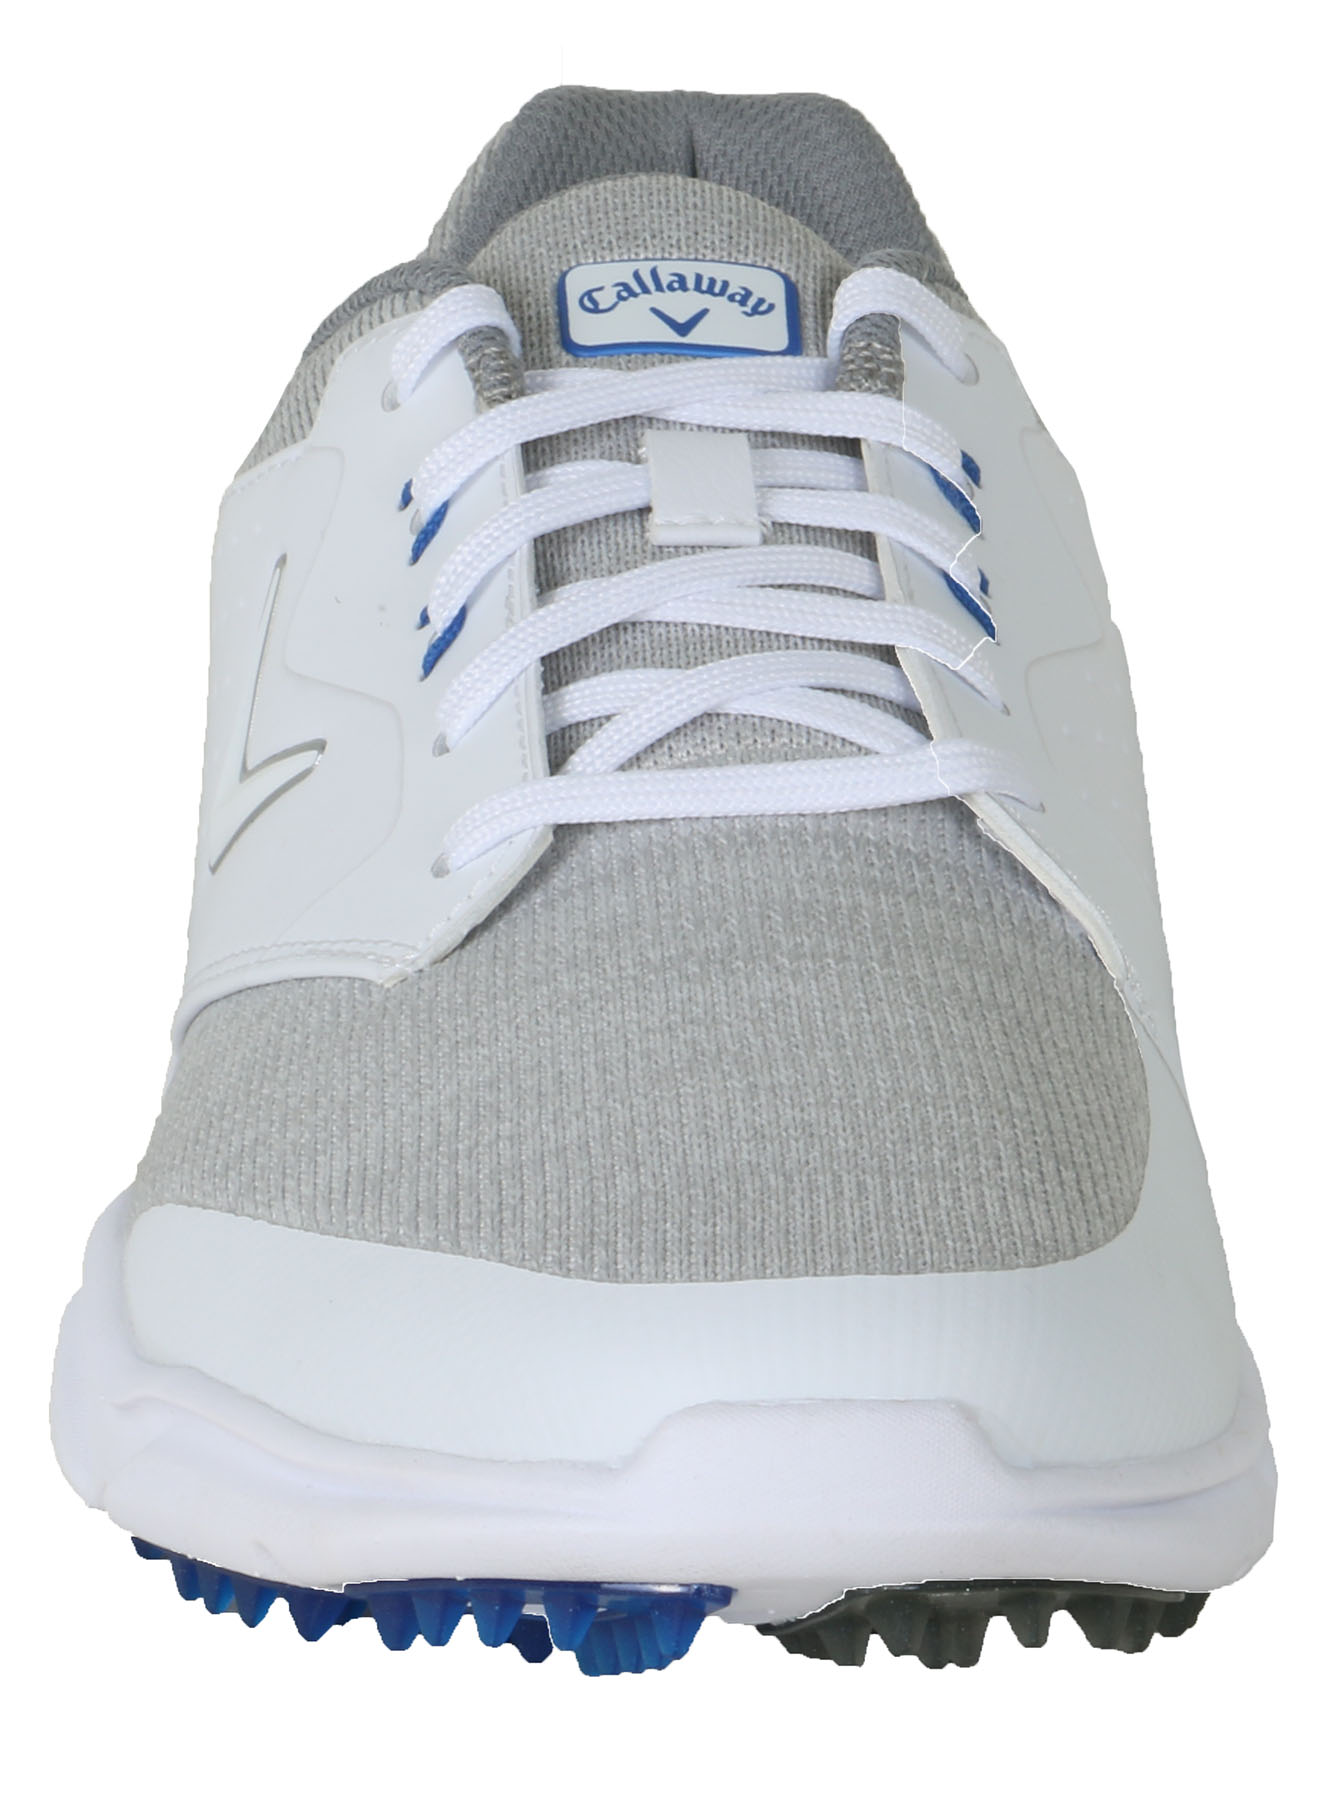 Callaway Men's Coronado v2 SL Golf Shoe White/Grey 11.5 for sale online